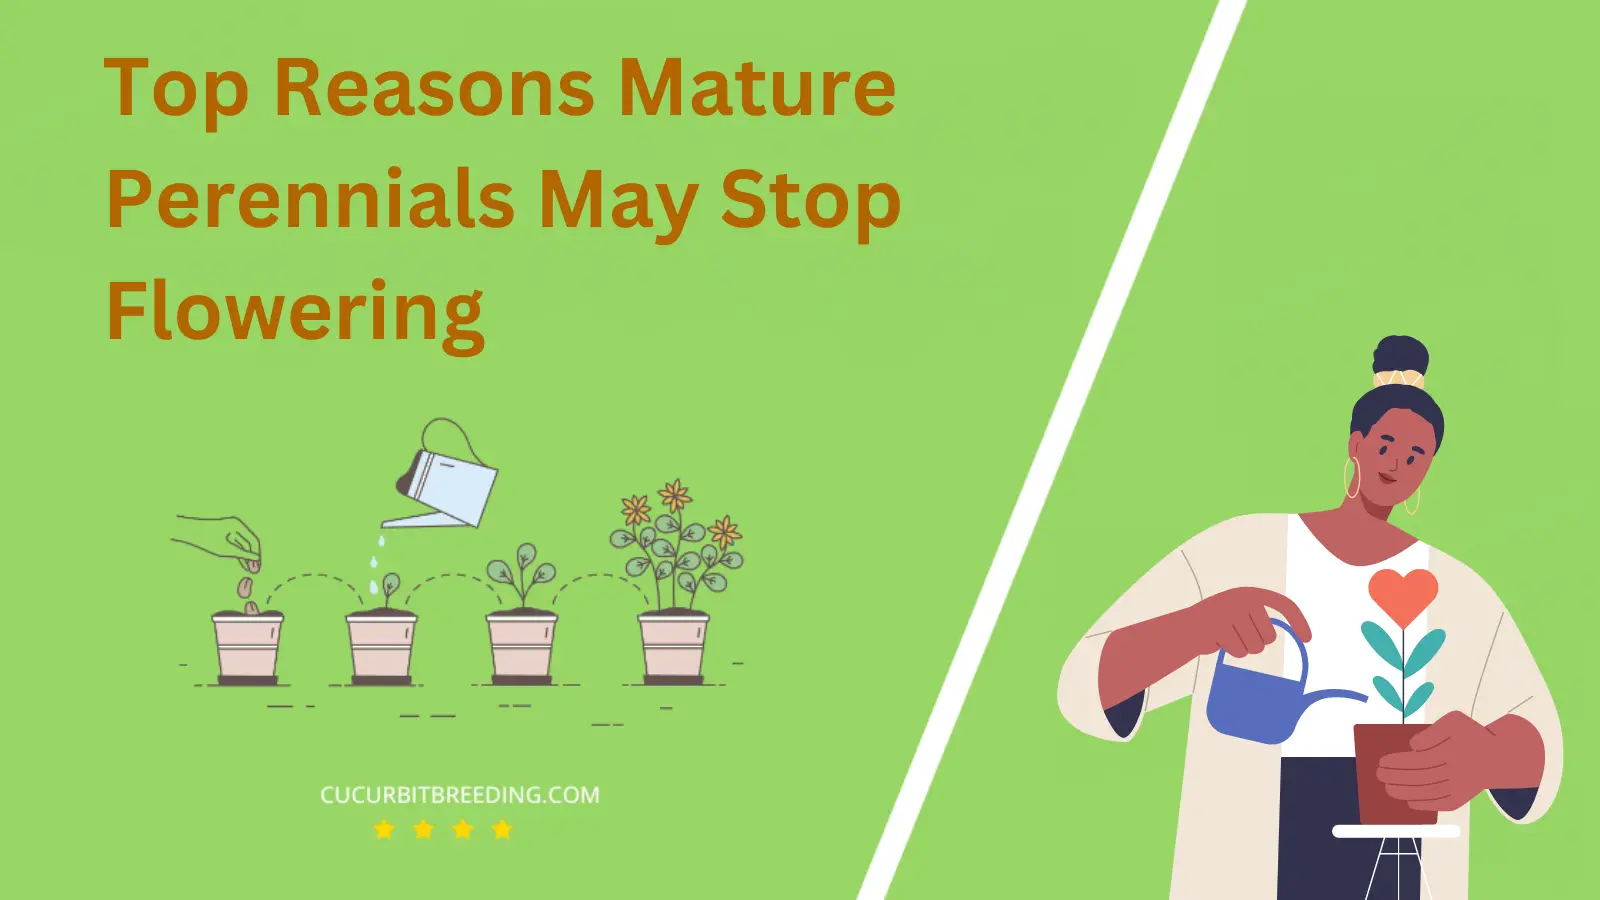 Top Reasons Mature Perennials May Stop Flowering